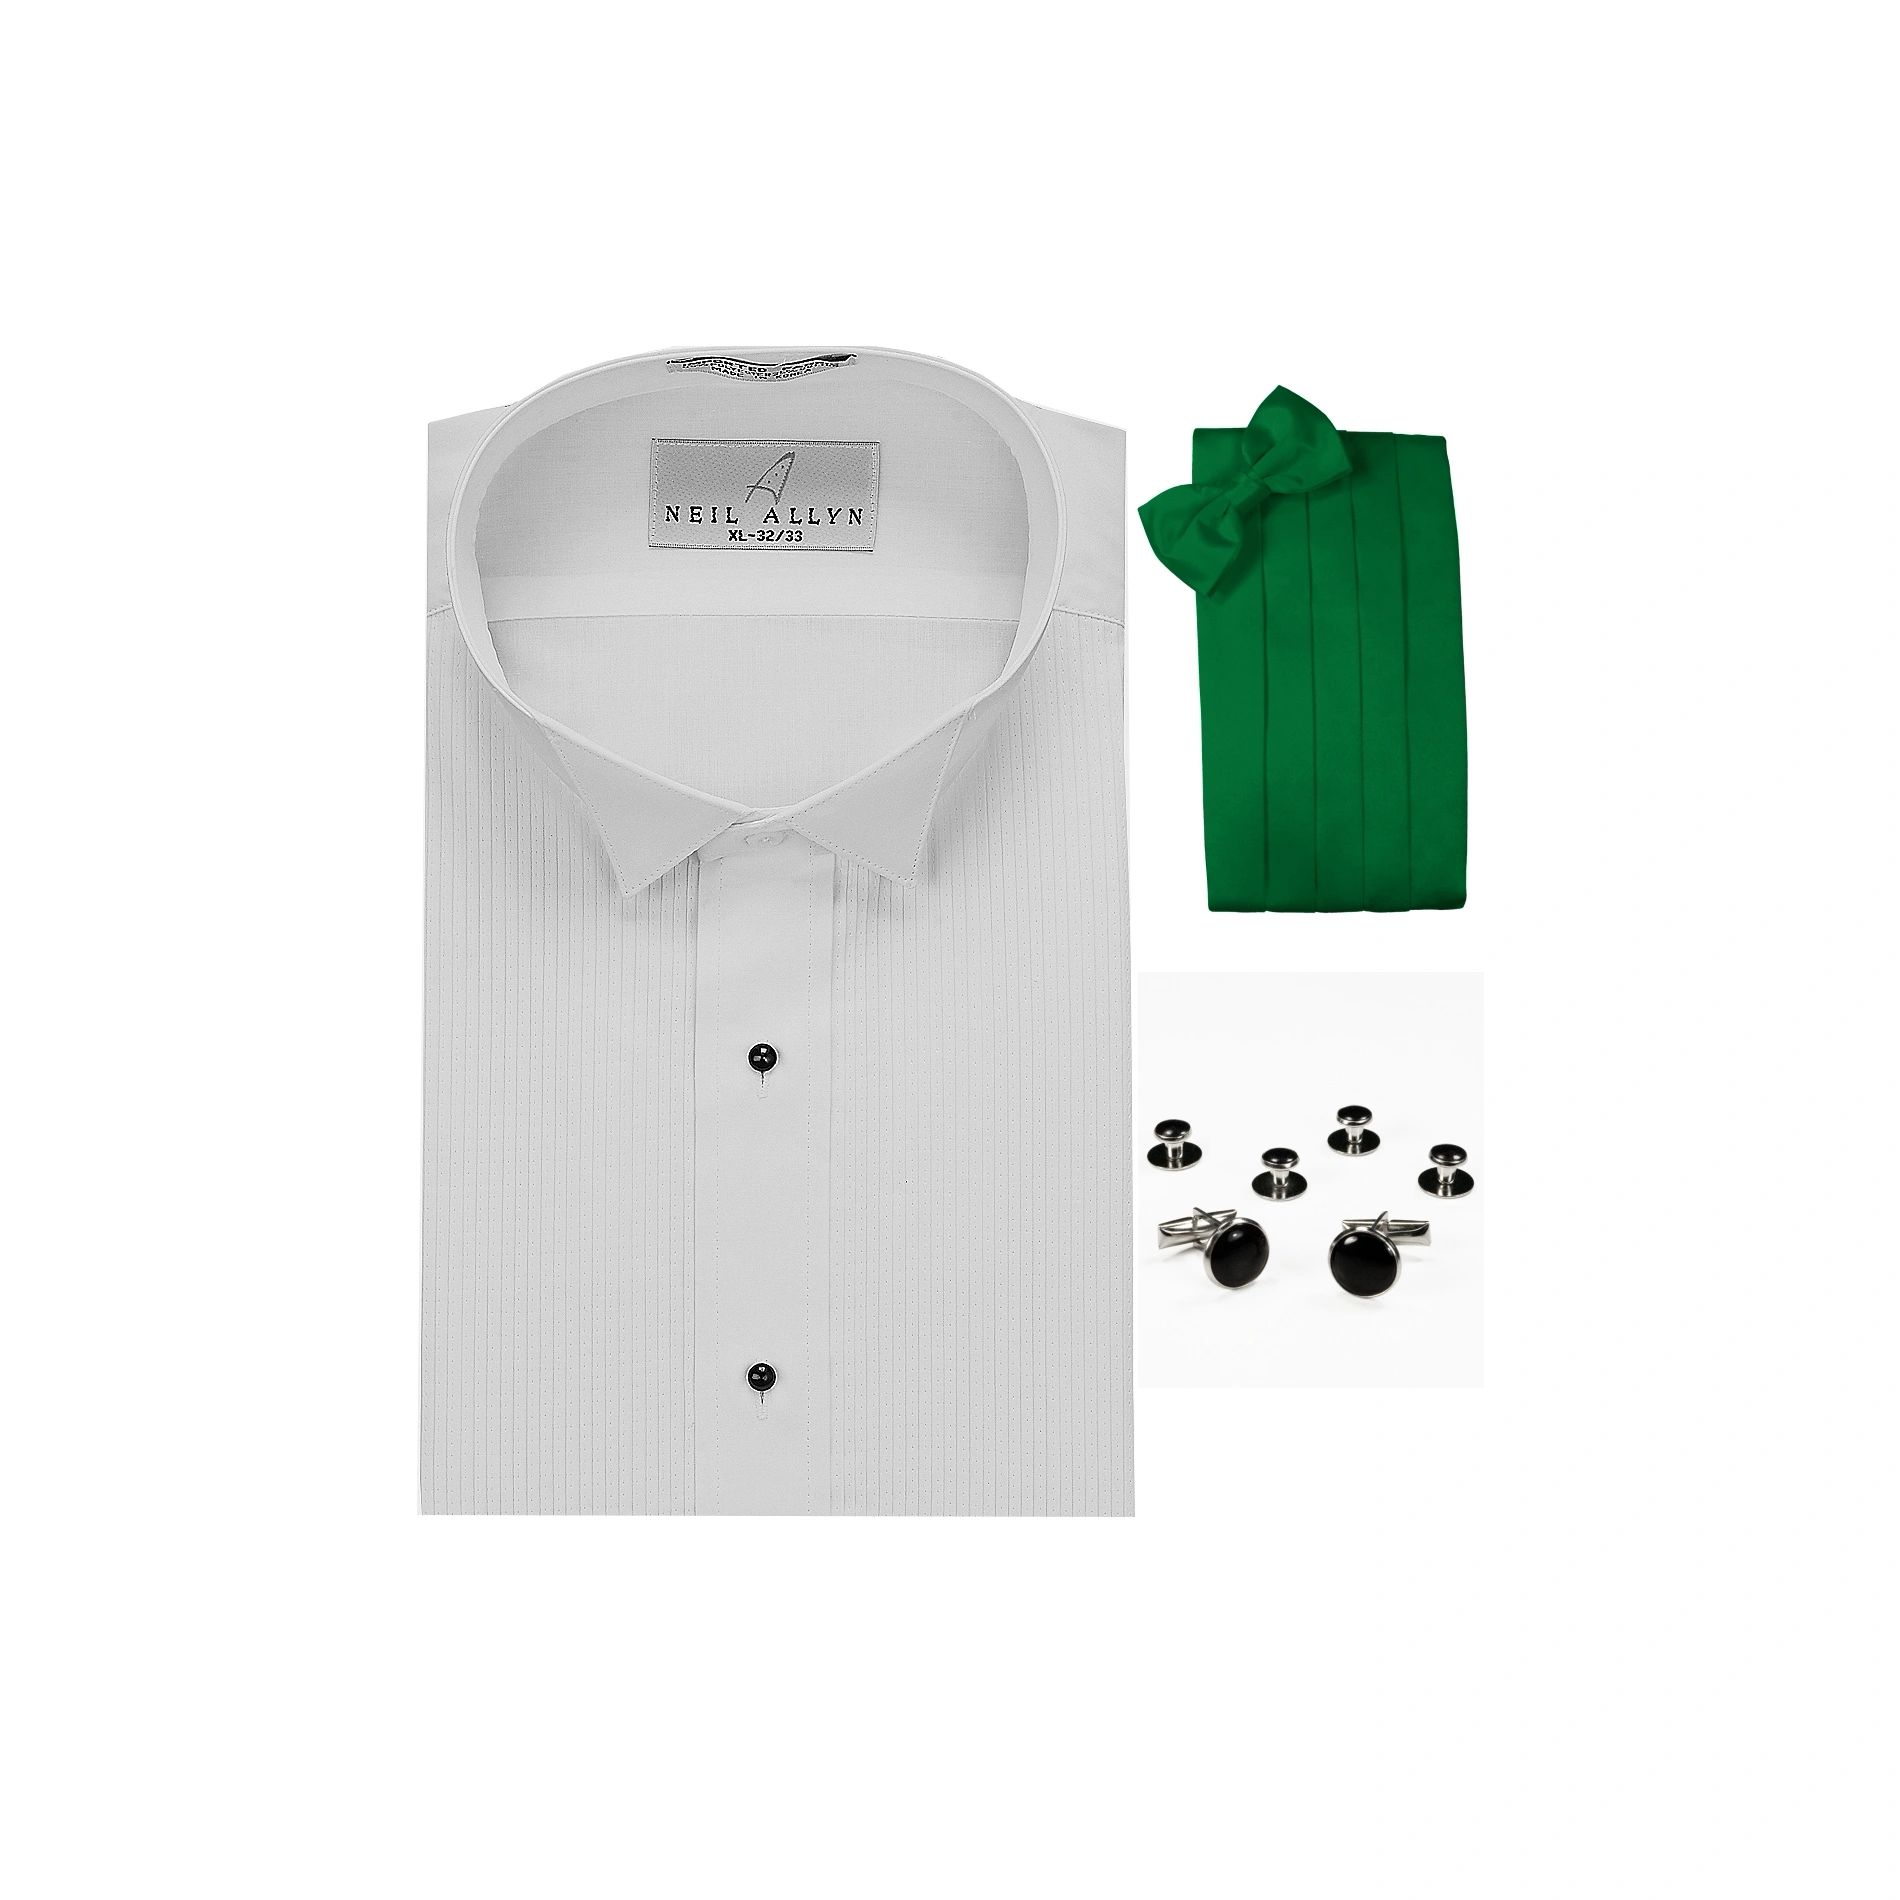 Neil Allyn Wing Collar 1/8" Pleats Formal Tuxedo Shirt, Kelly Green Cummerbund, Bow-Tie, Cuff Links & Studs Set